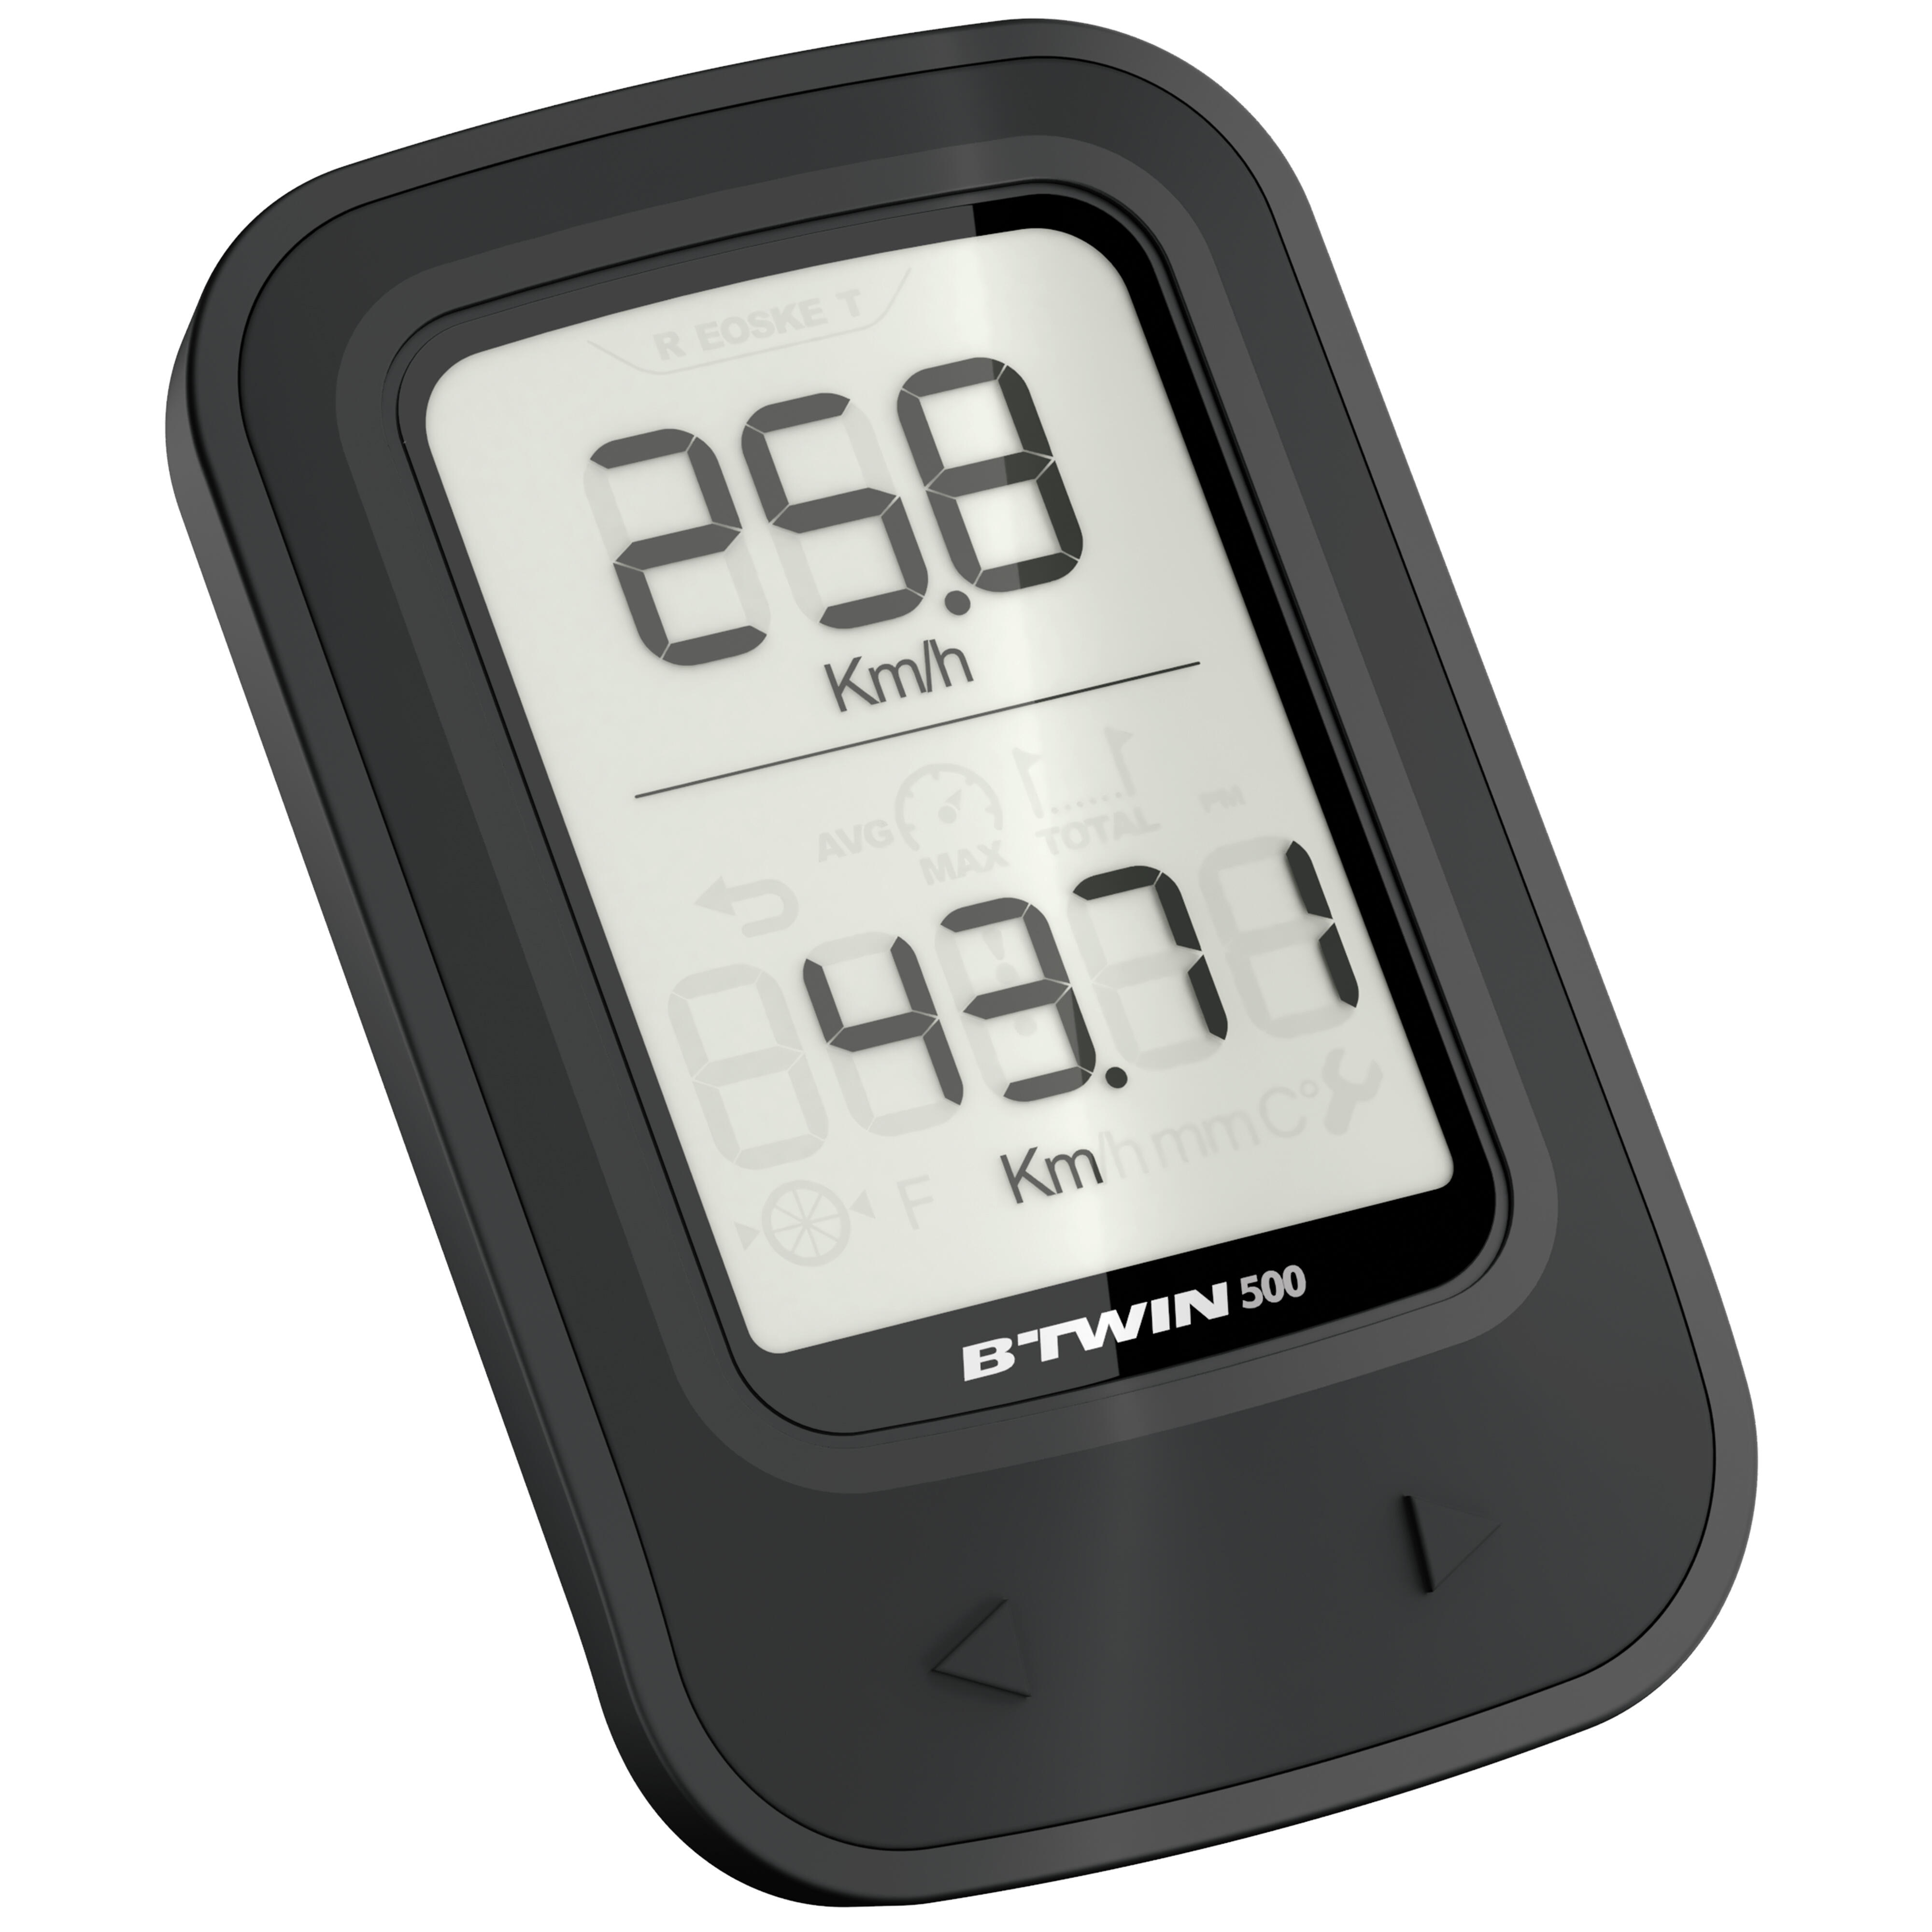 Cuentakilómetros GPS bici Van Rysel 100